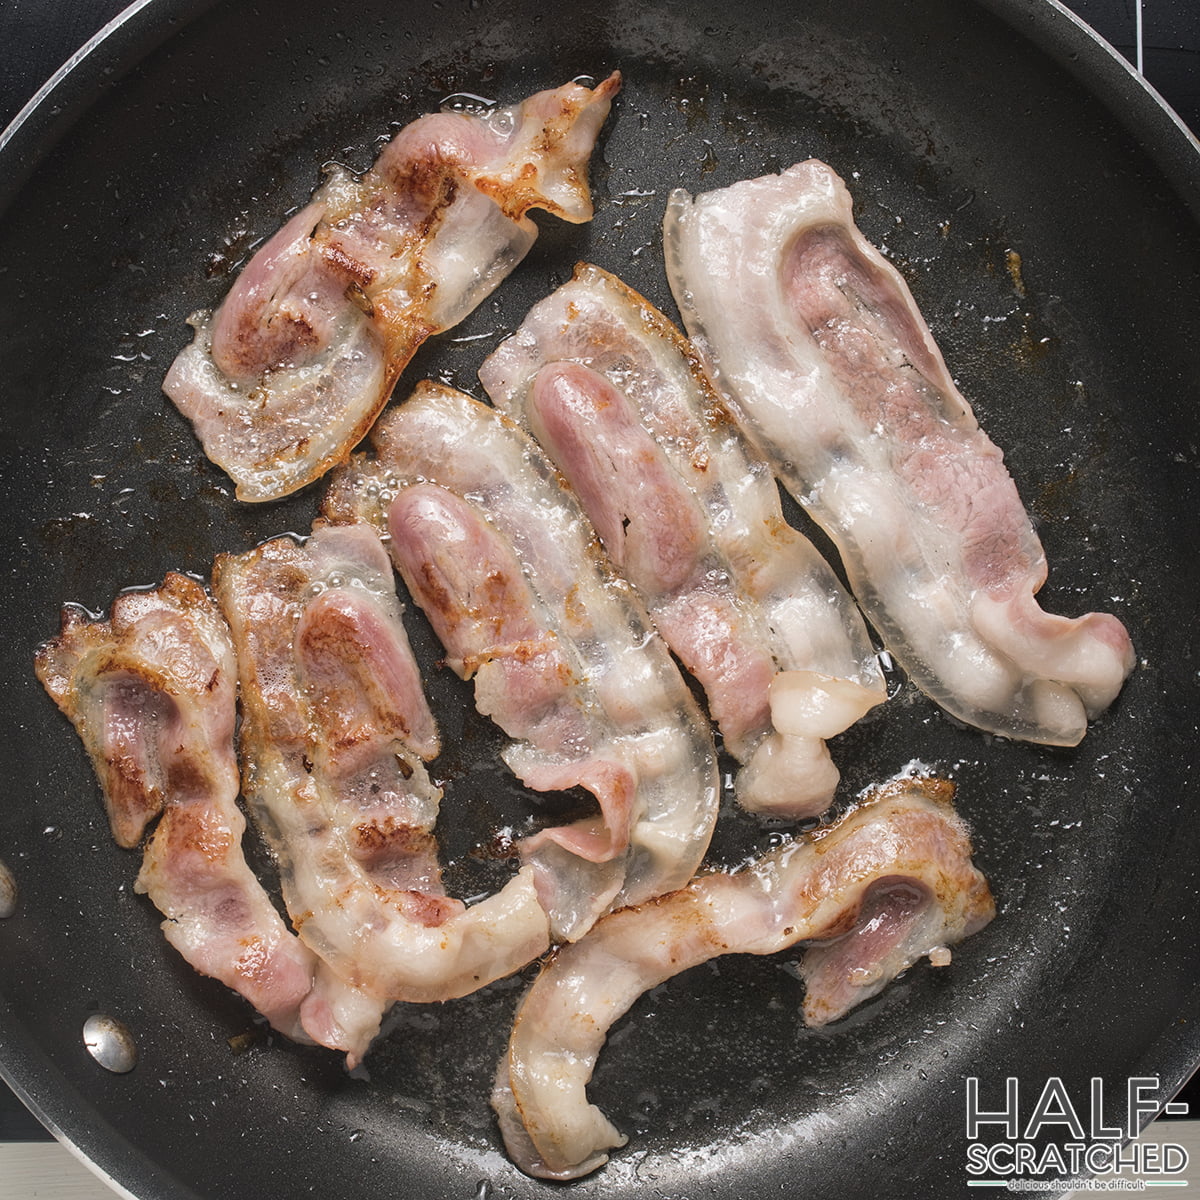 Fried bacon rashers in a frying pan